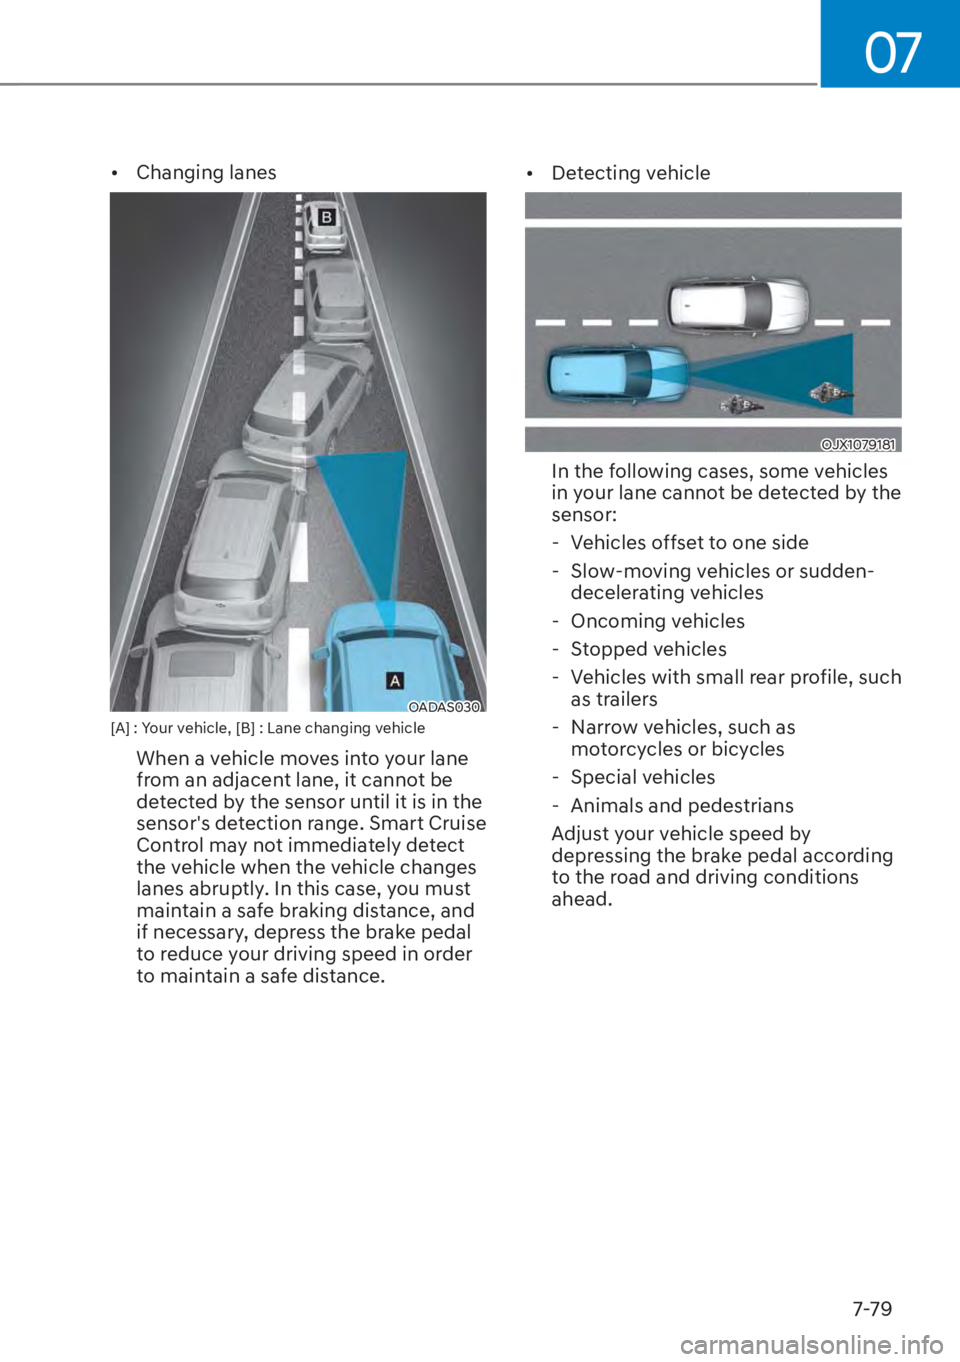 HYUNDAI SANTA FE HYBRID 2023  Owners Manual 07
7-79
[�Changing lanes
OADAS030 [A] : Your vehicle, [B] : Lane changing vehicle
When a vehicle moves into your lane 
from an adjacent lane, it cannot be 
detected by the sensor until it is in the 